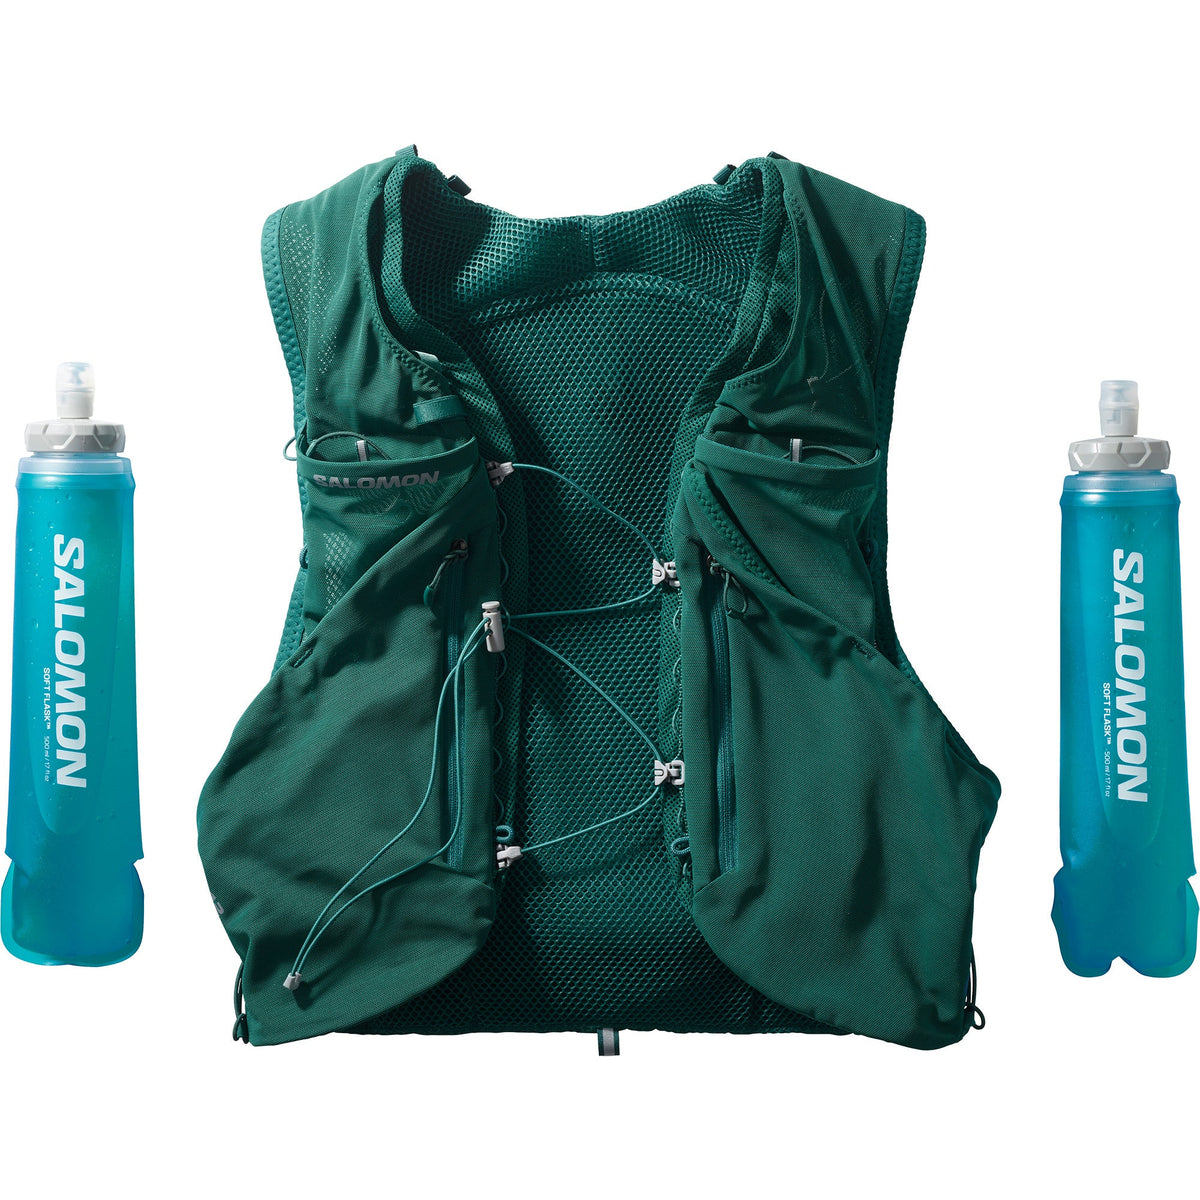 Salomon Advanced Skin 12 Hydration Pack HYDRATION - Packs 